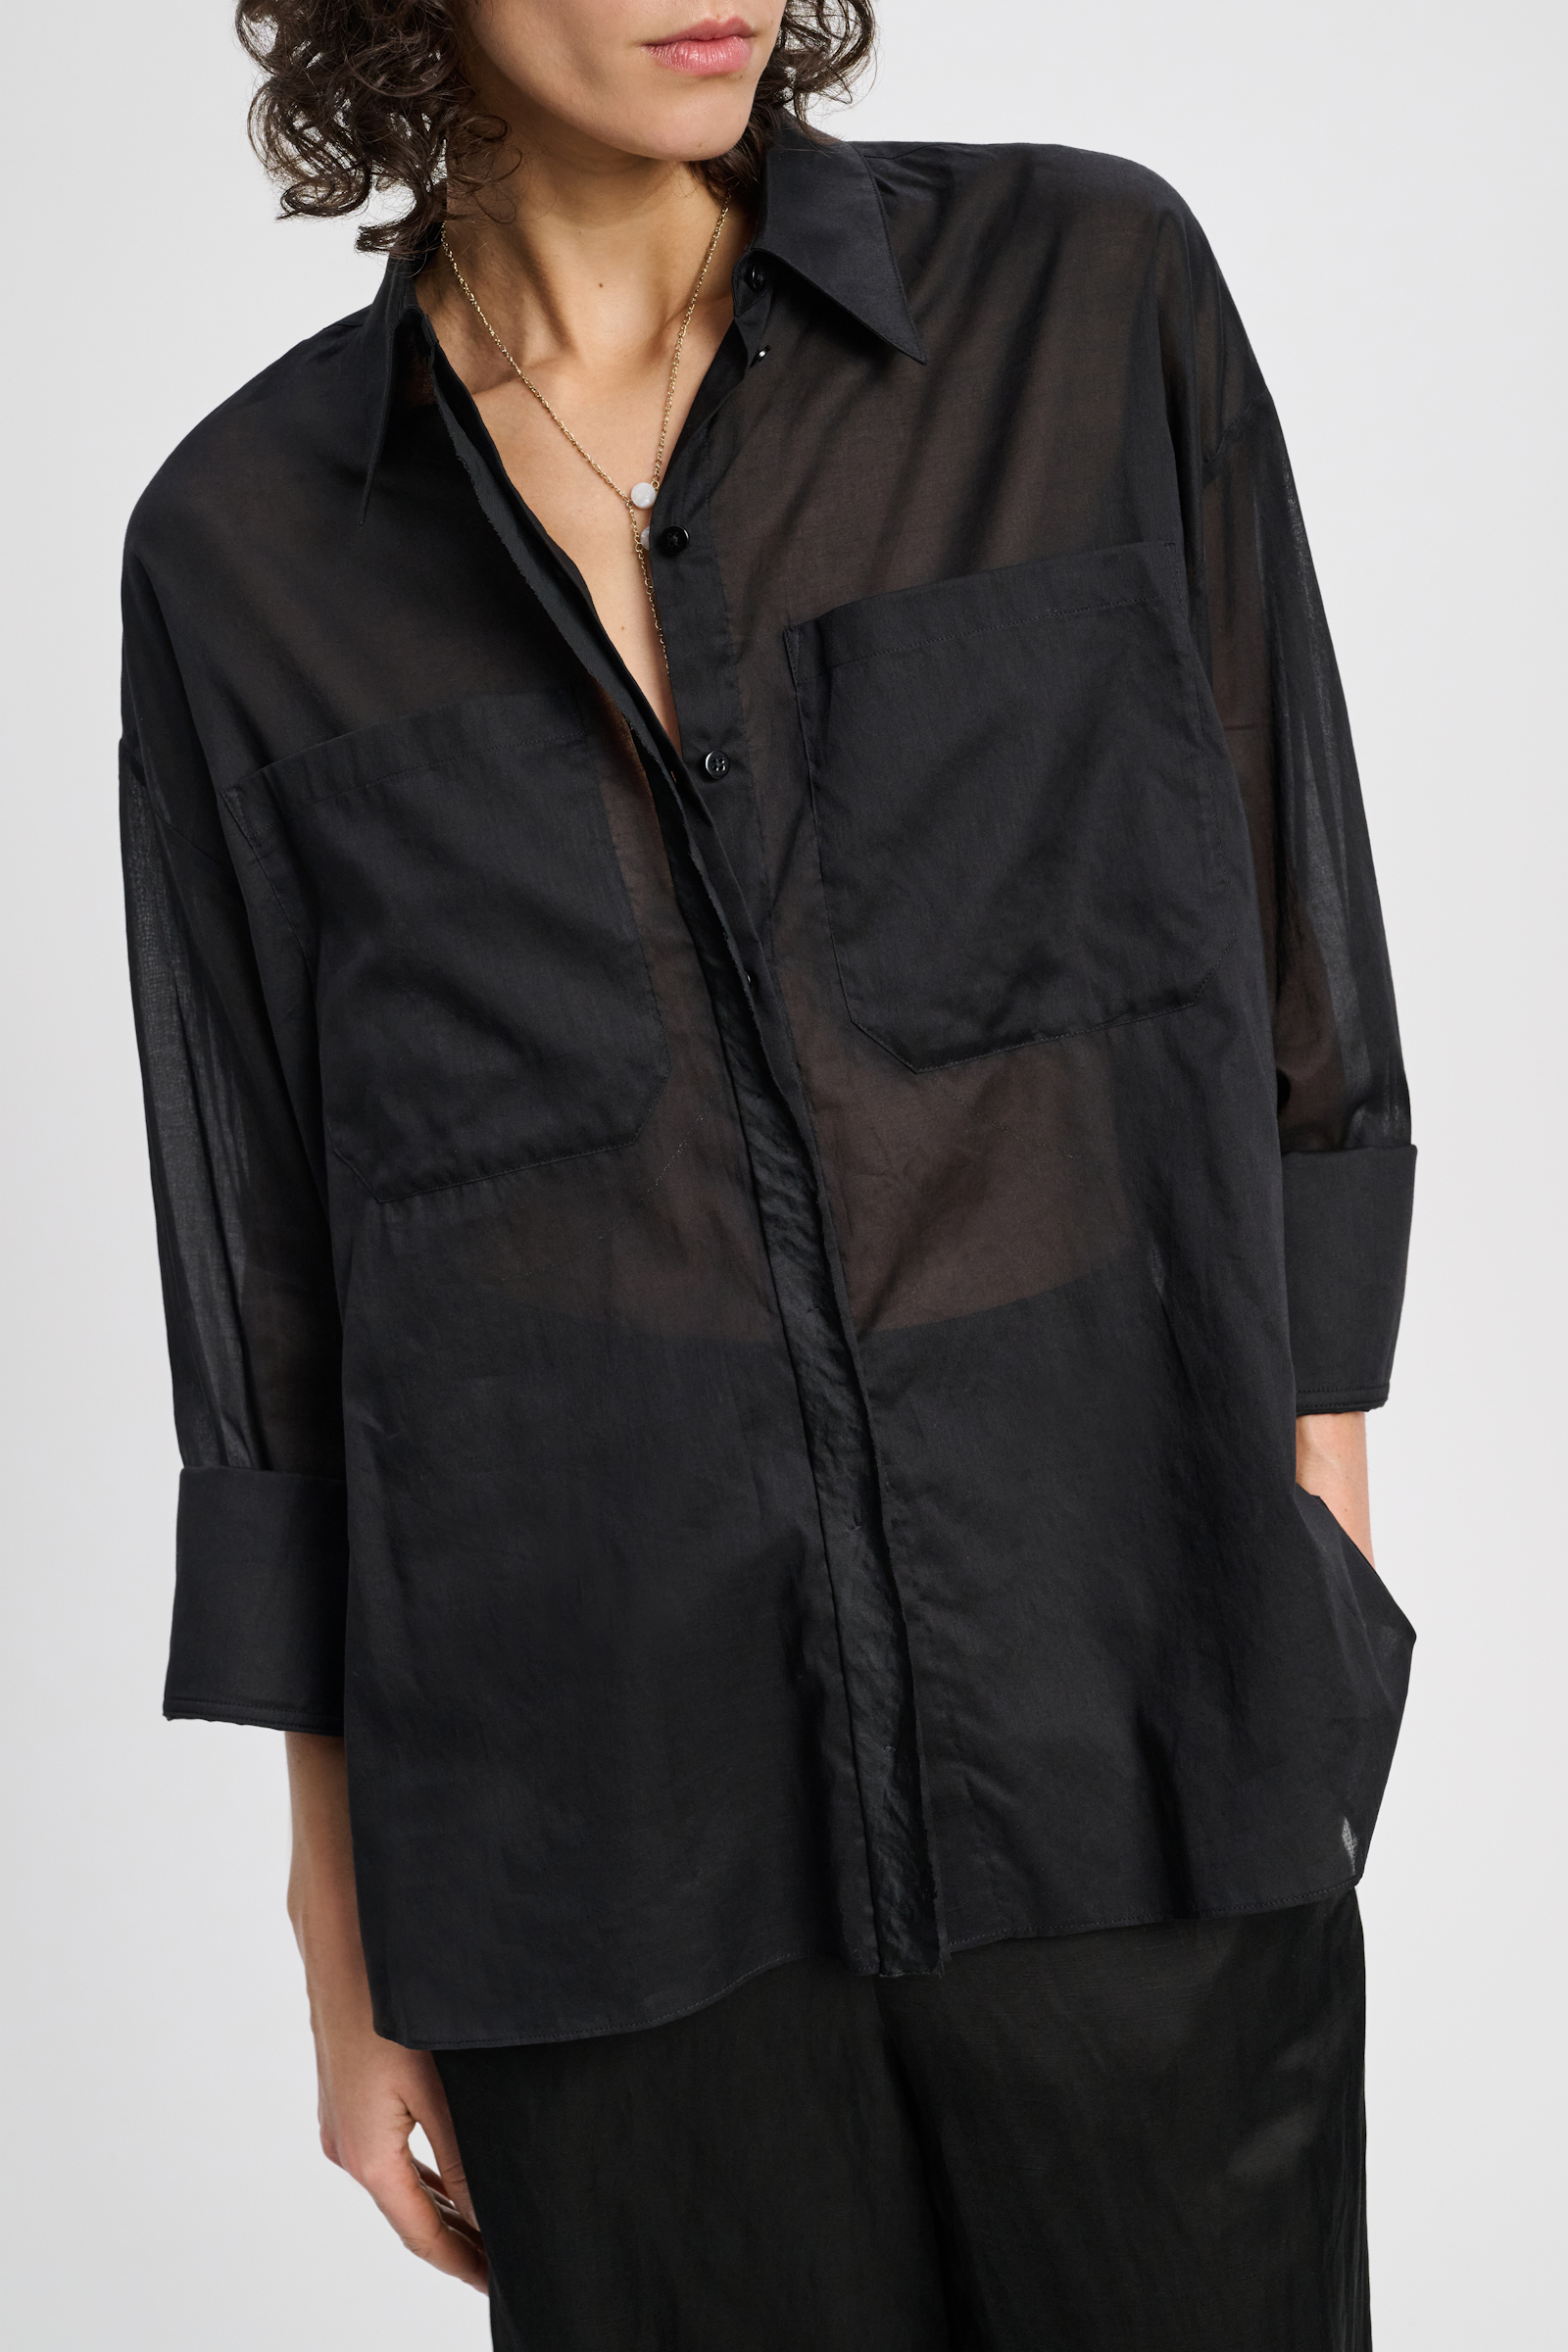 Dorothee Schumacher Oversized Bluse aus Cotton Voile pure black